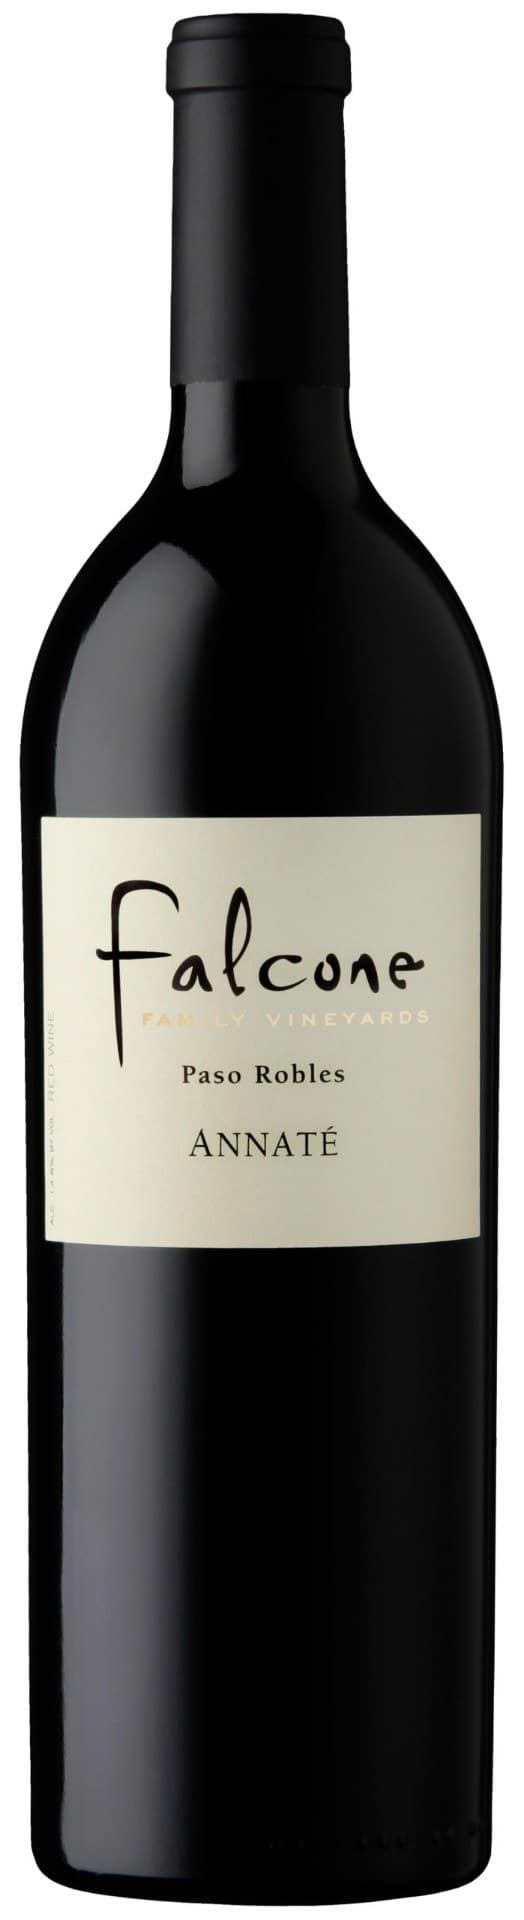 Falcone NV Annaté IX Red wine